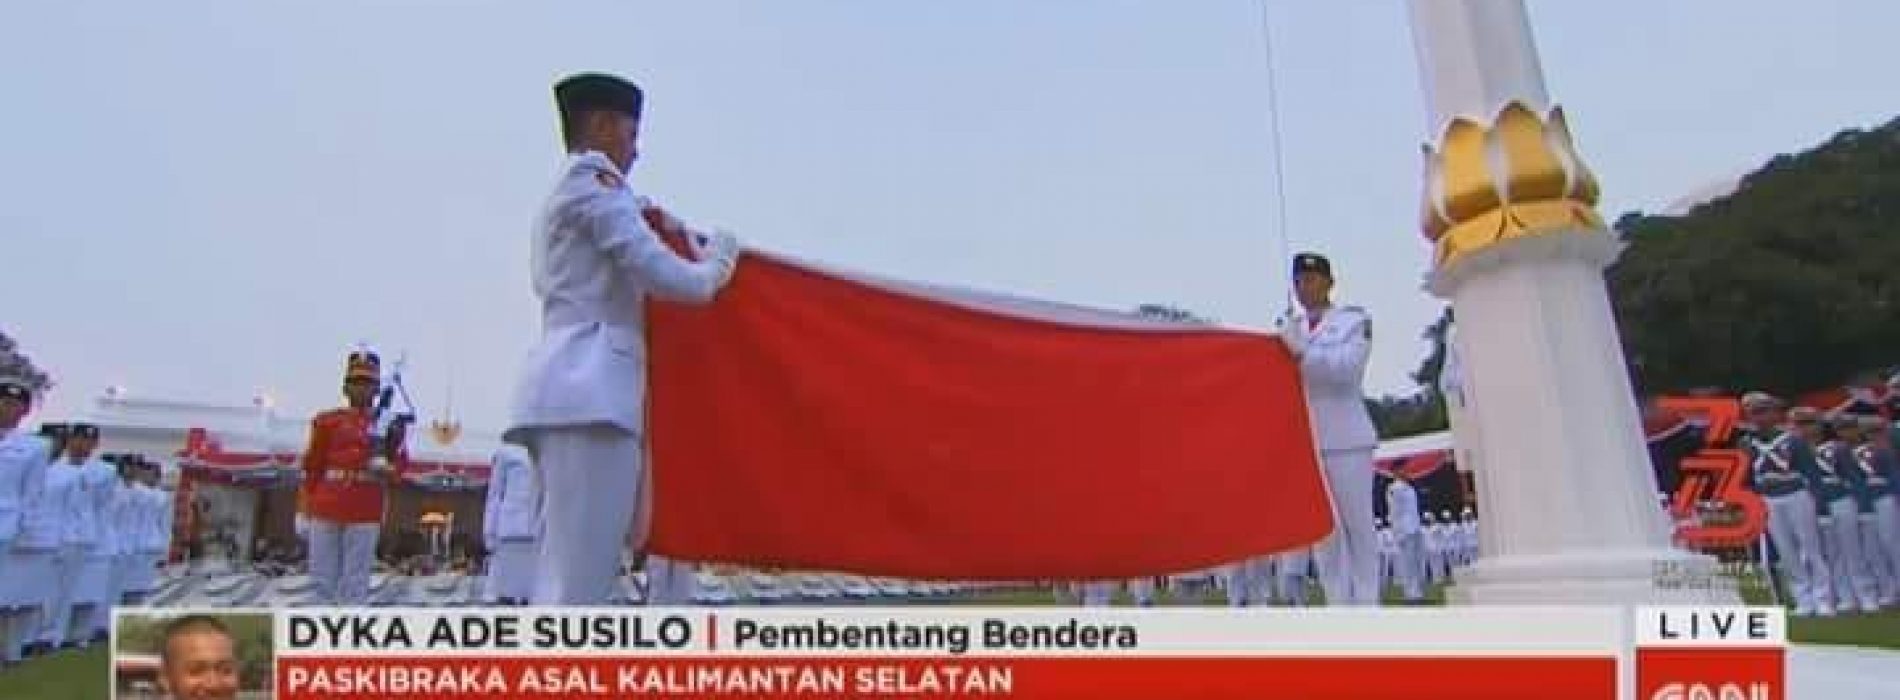 Dyka “Sang Pembentang Bendera” pada Upacara Penurunan Bendera di Istana Merdeka 17 Agustus 2018